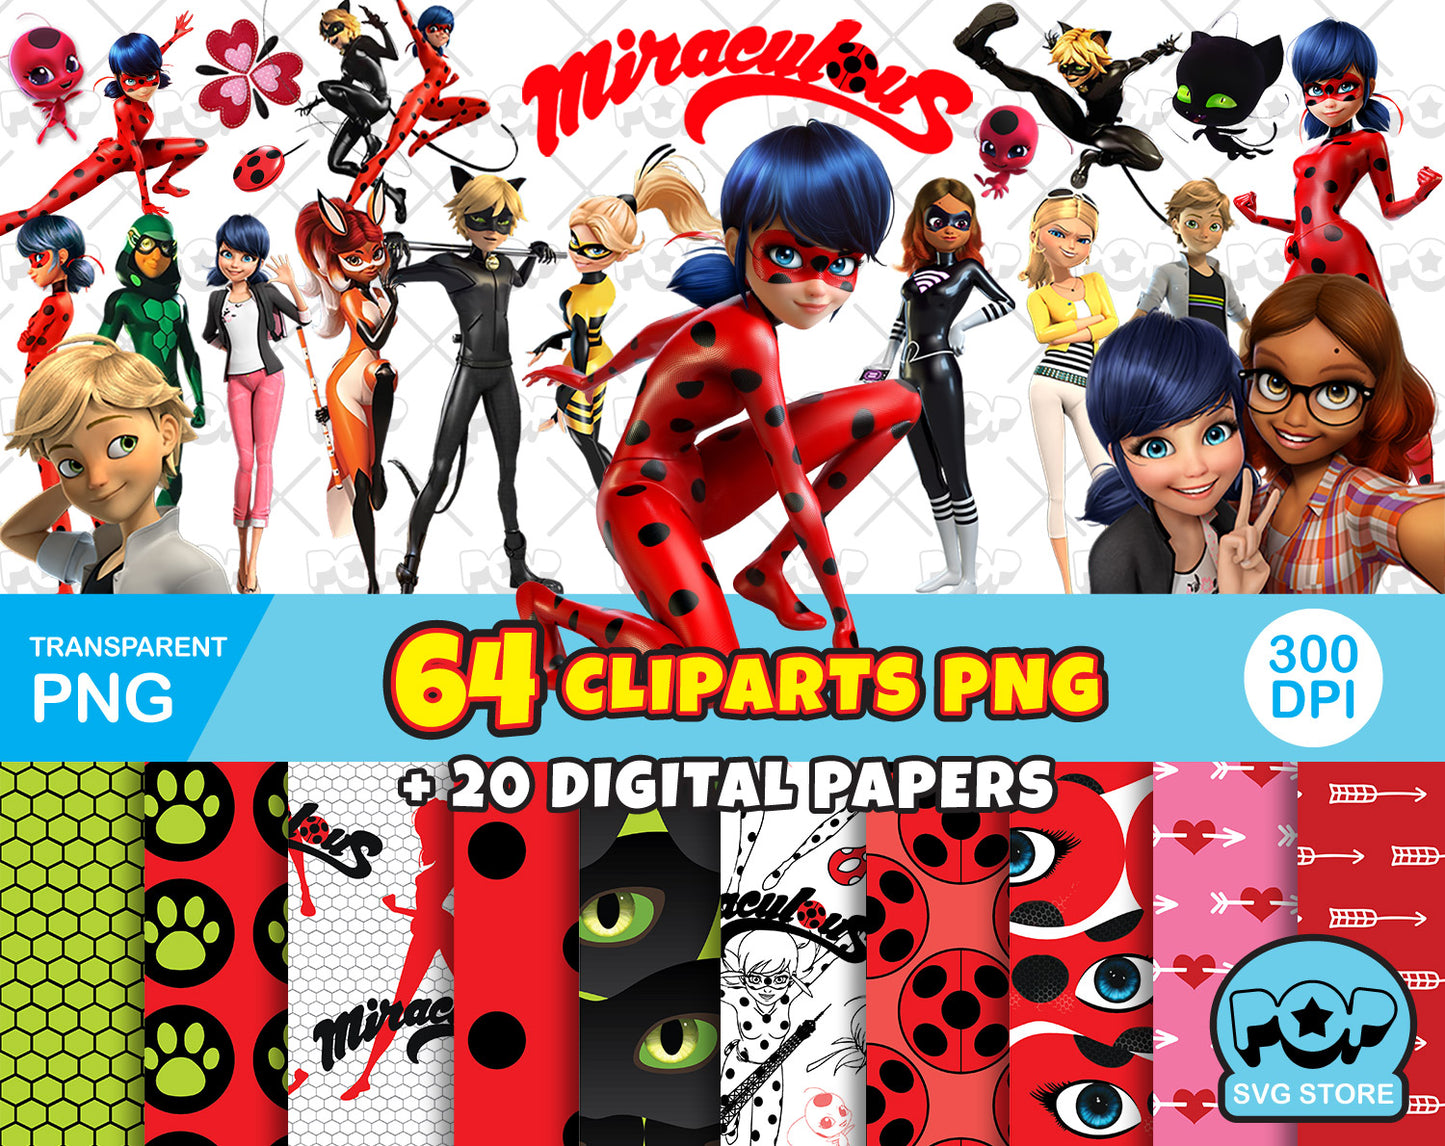 Miraculous cliparts + digital papers, transparent PNG, designs for decoration / sublimation, instant download